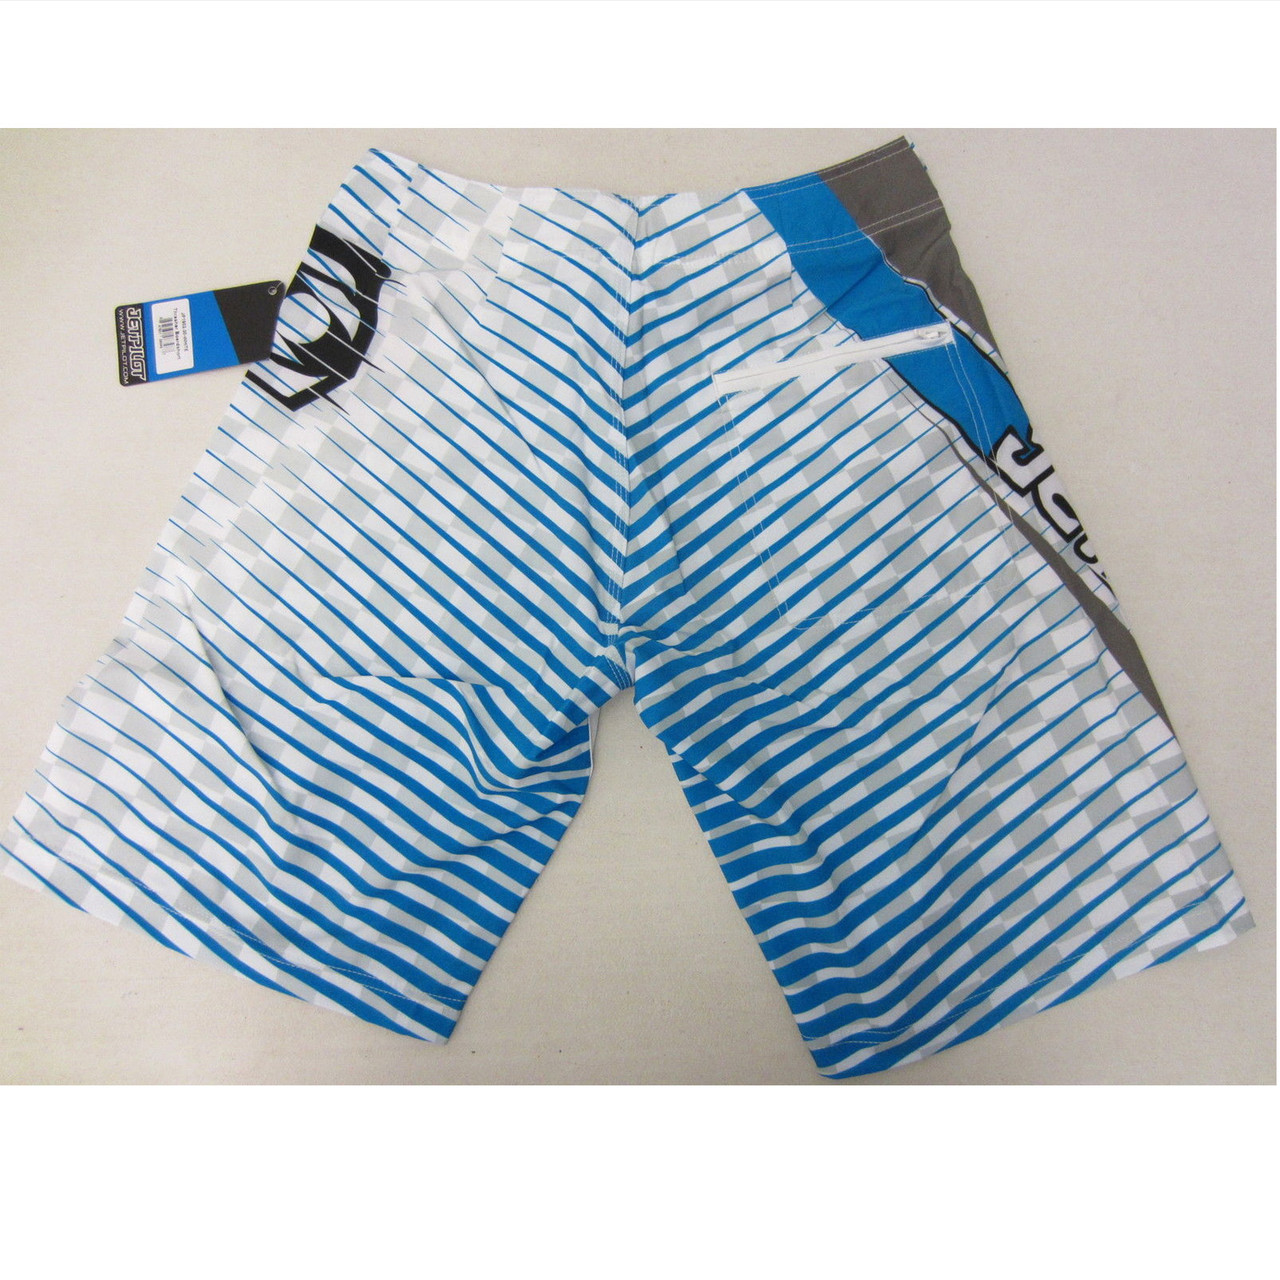 JetPilot New Mens Thrasher Boardshorts Swim Suit Trunks White/Blue Size 30